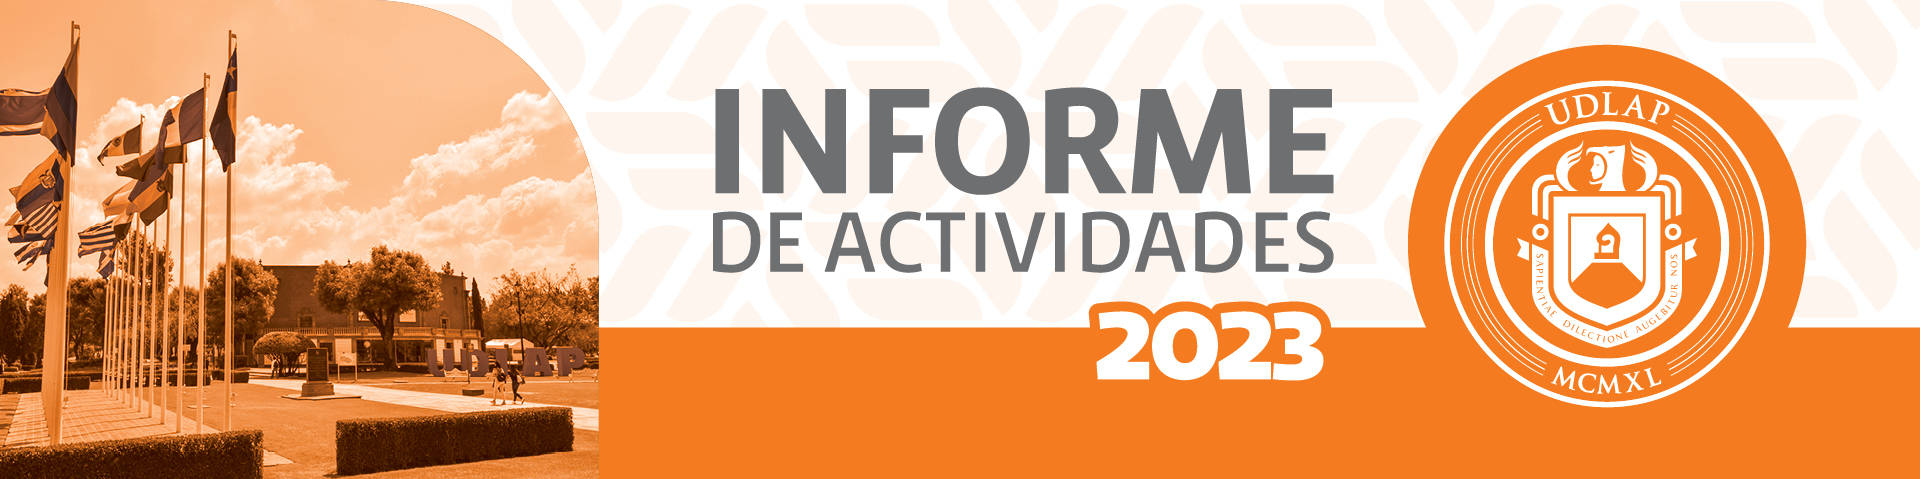 Informe de actividades 2021-2022 UDLAP